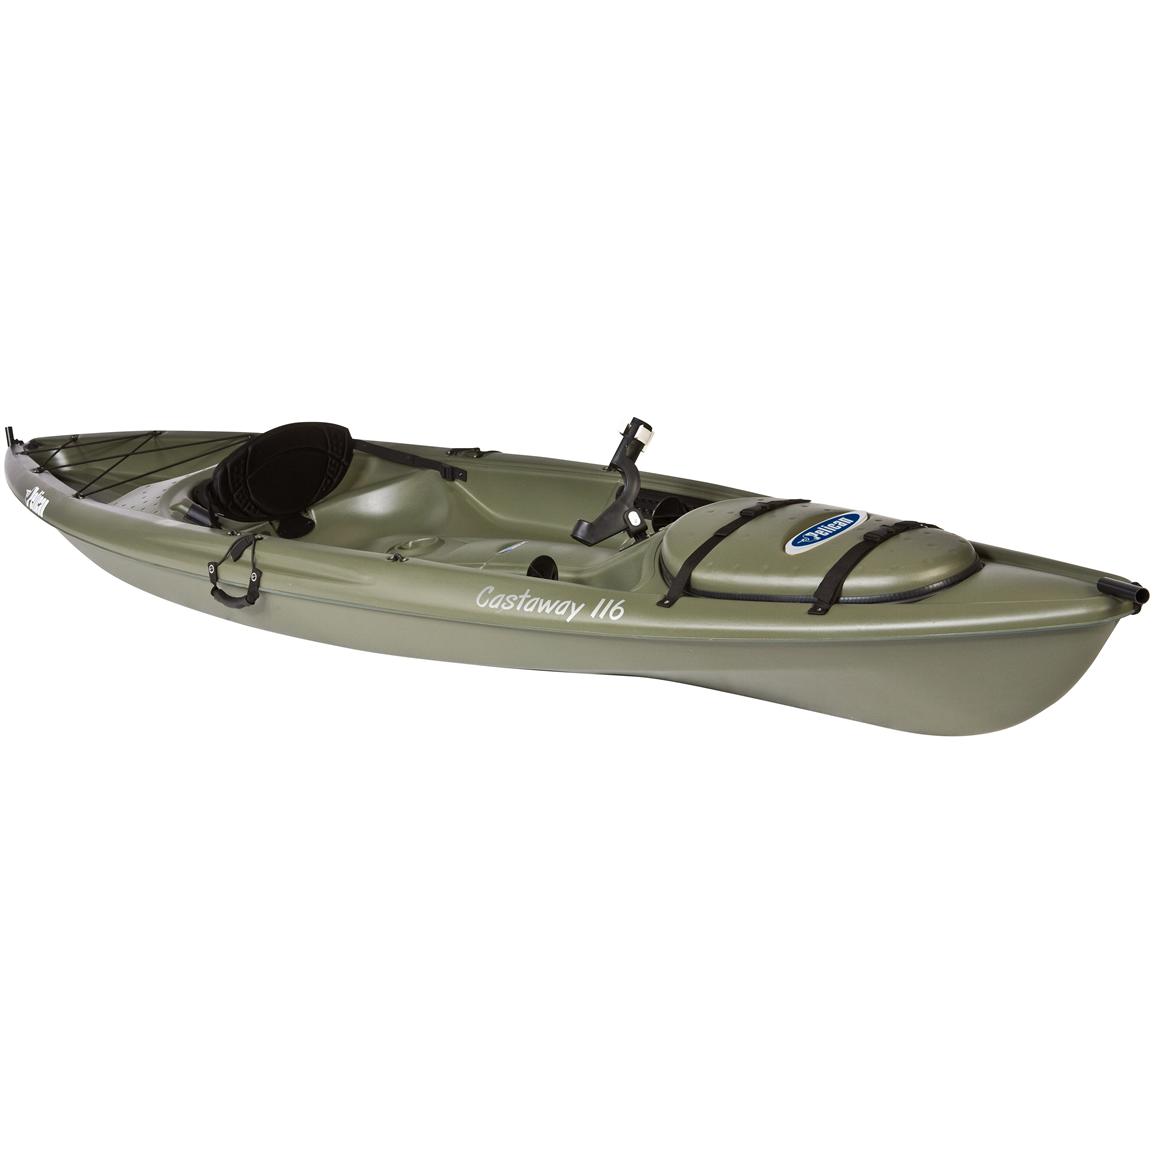 Pelican™ Castaway 116 Kayak, Khaki - 206253, Canoes 